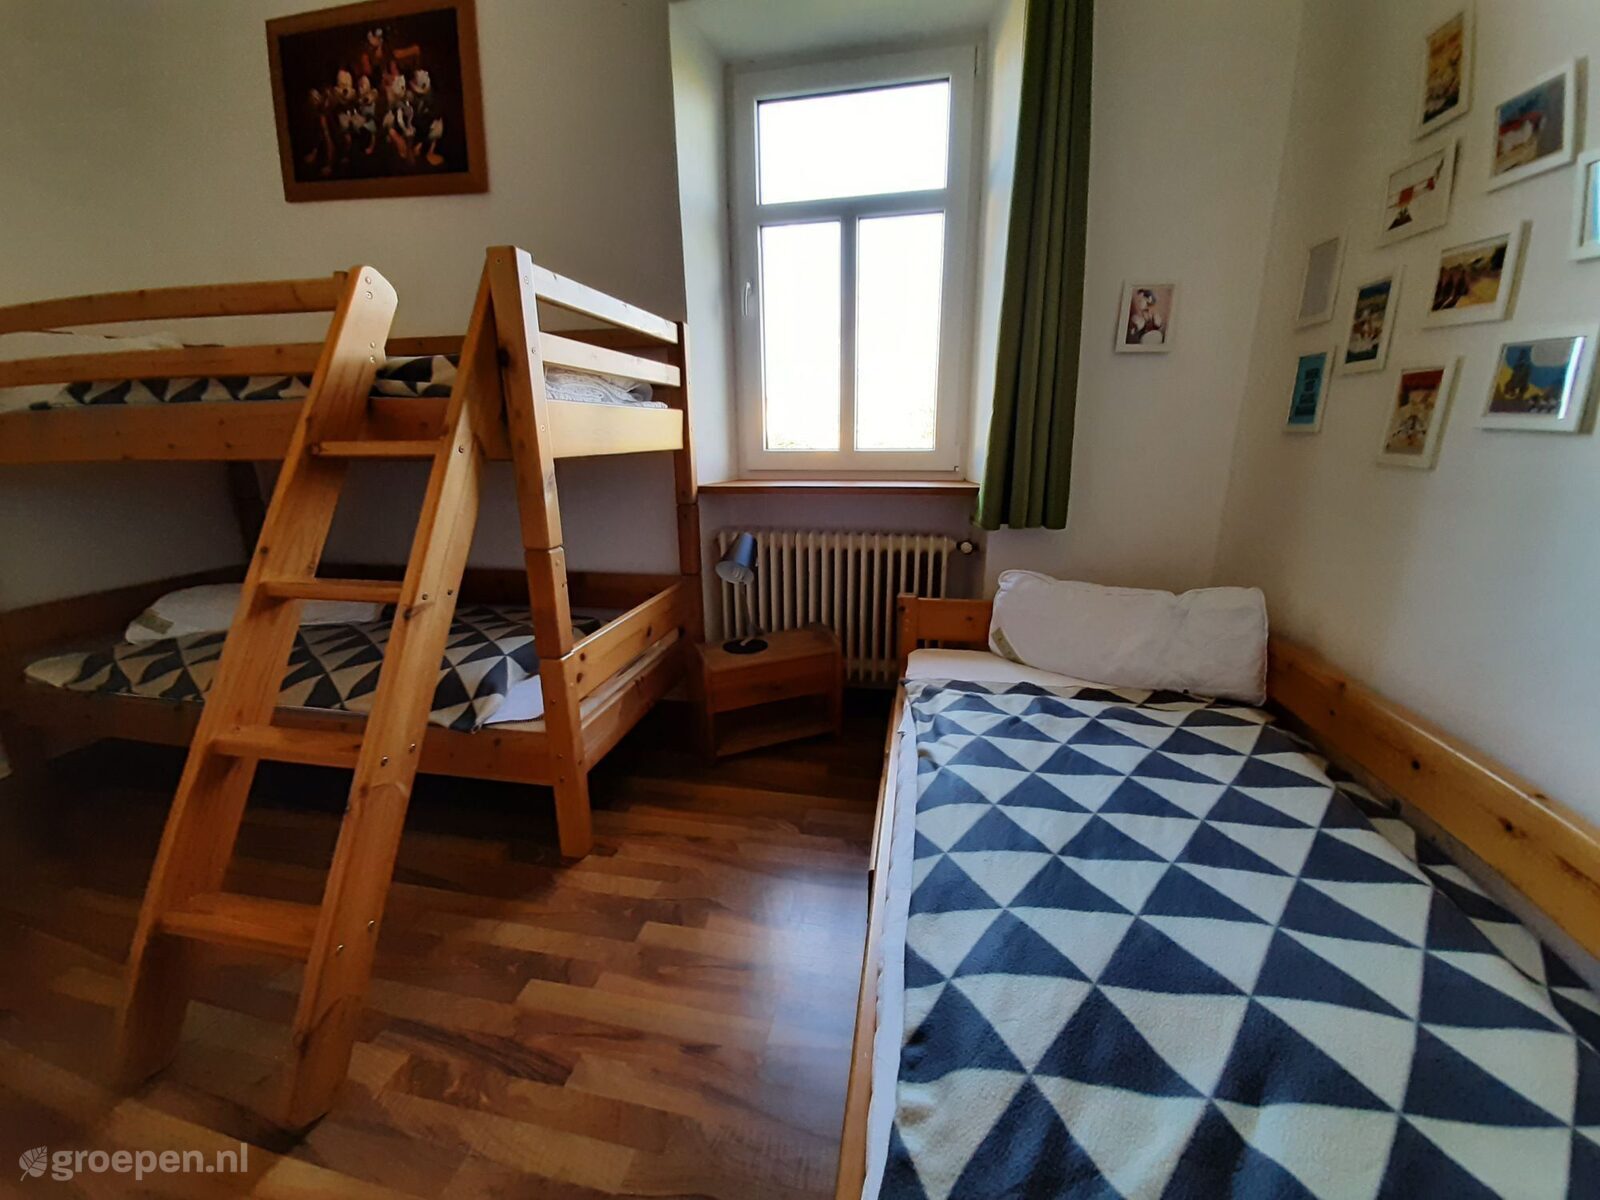 Group accommodation Rodershausen